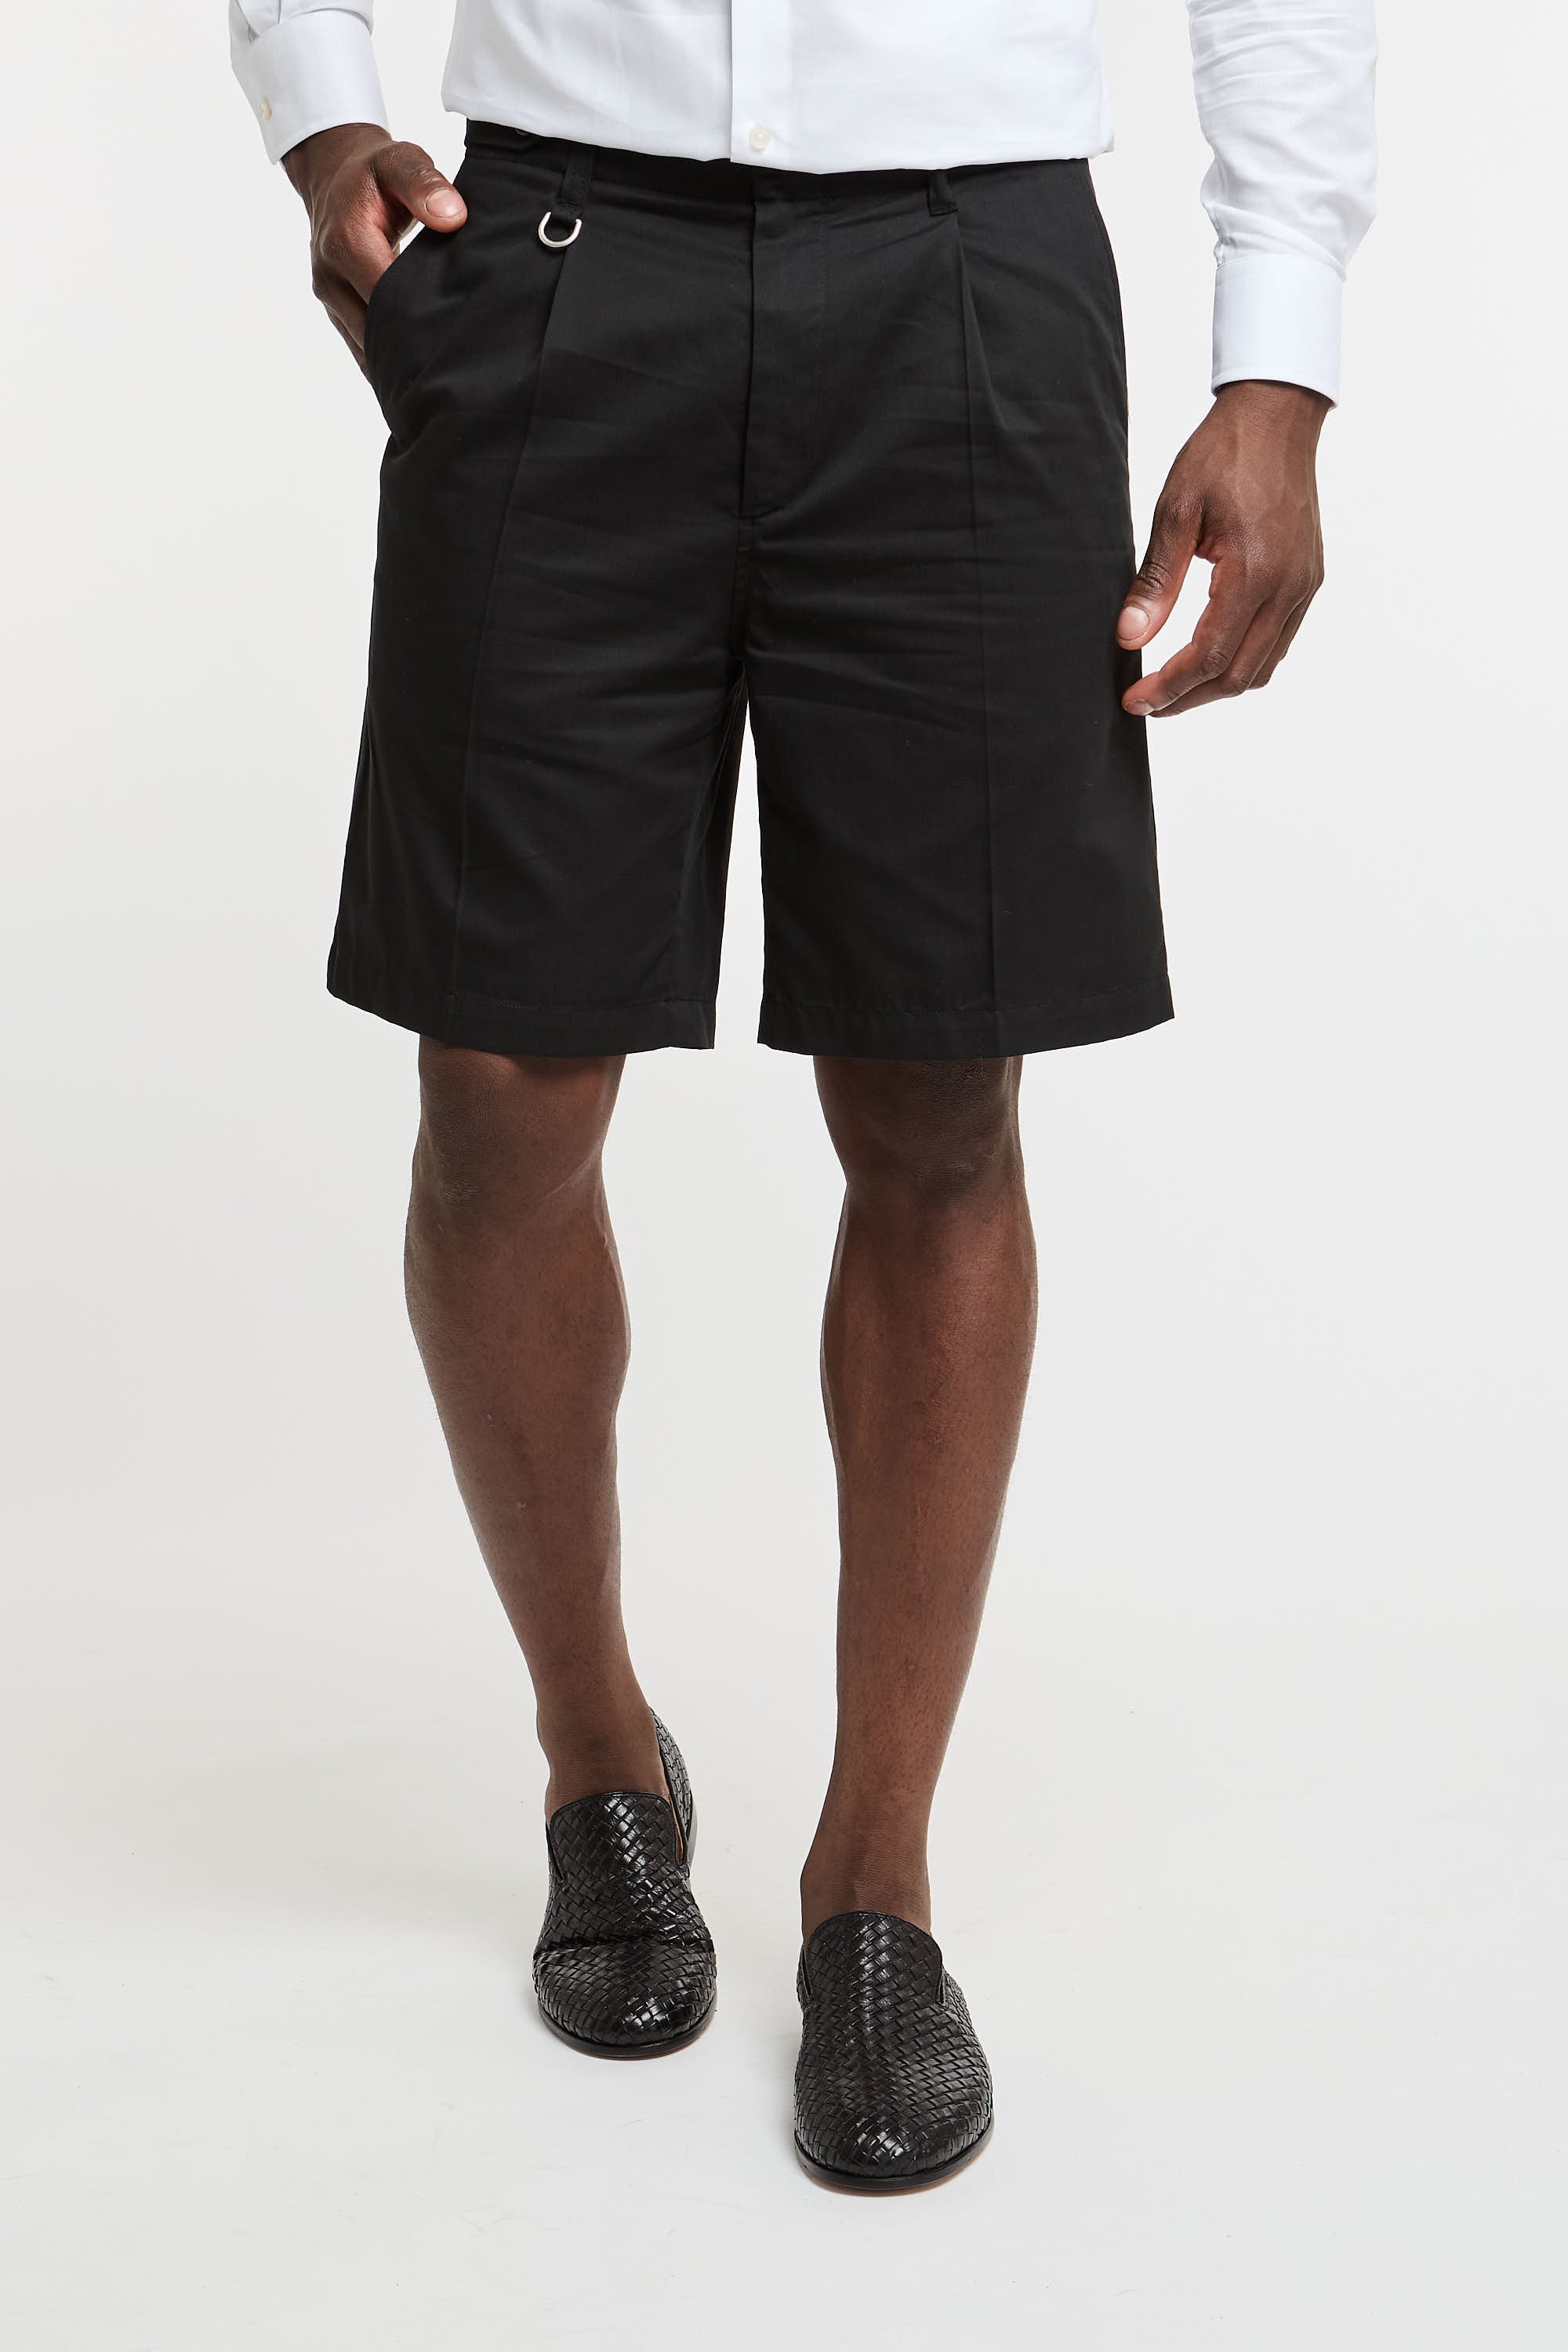 Paolo Pecora Black Cotton Blend Bermuda Shorts-4